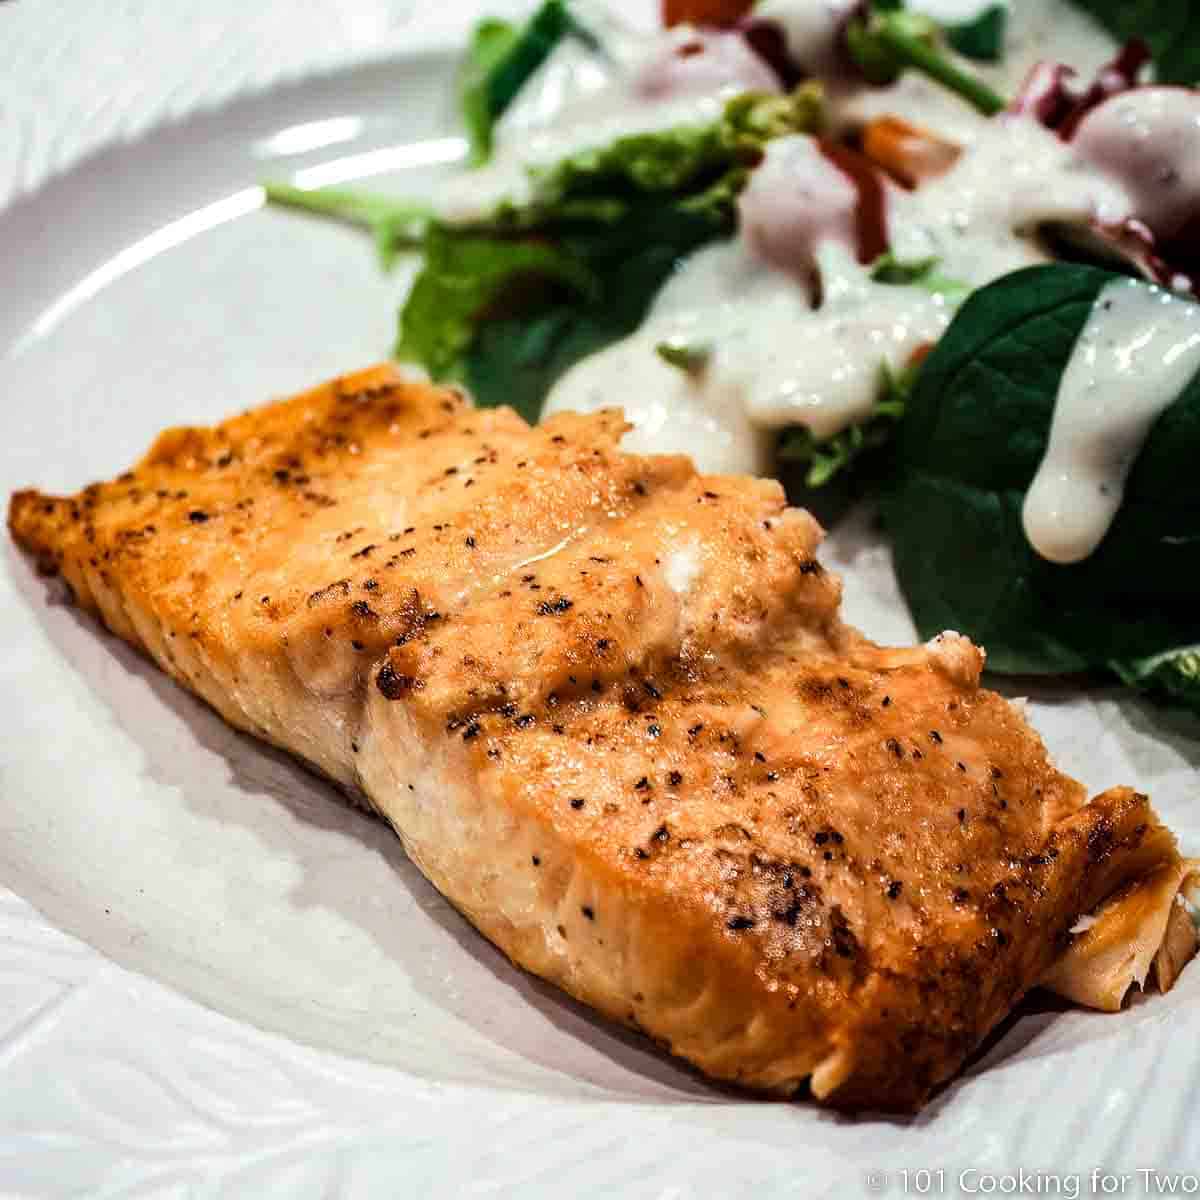 Salmon with salad on light gray plate